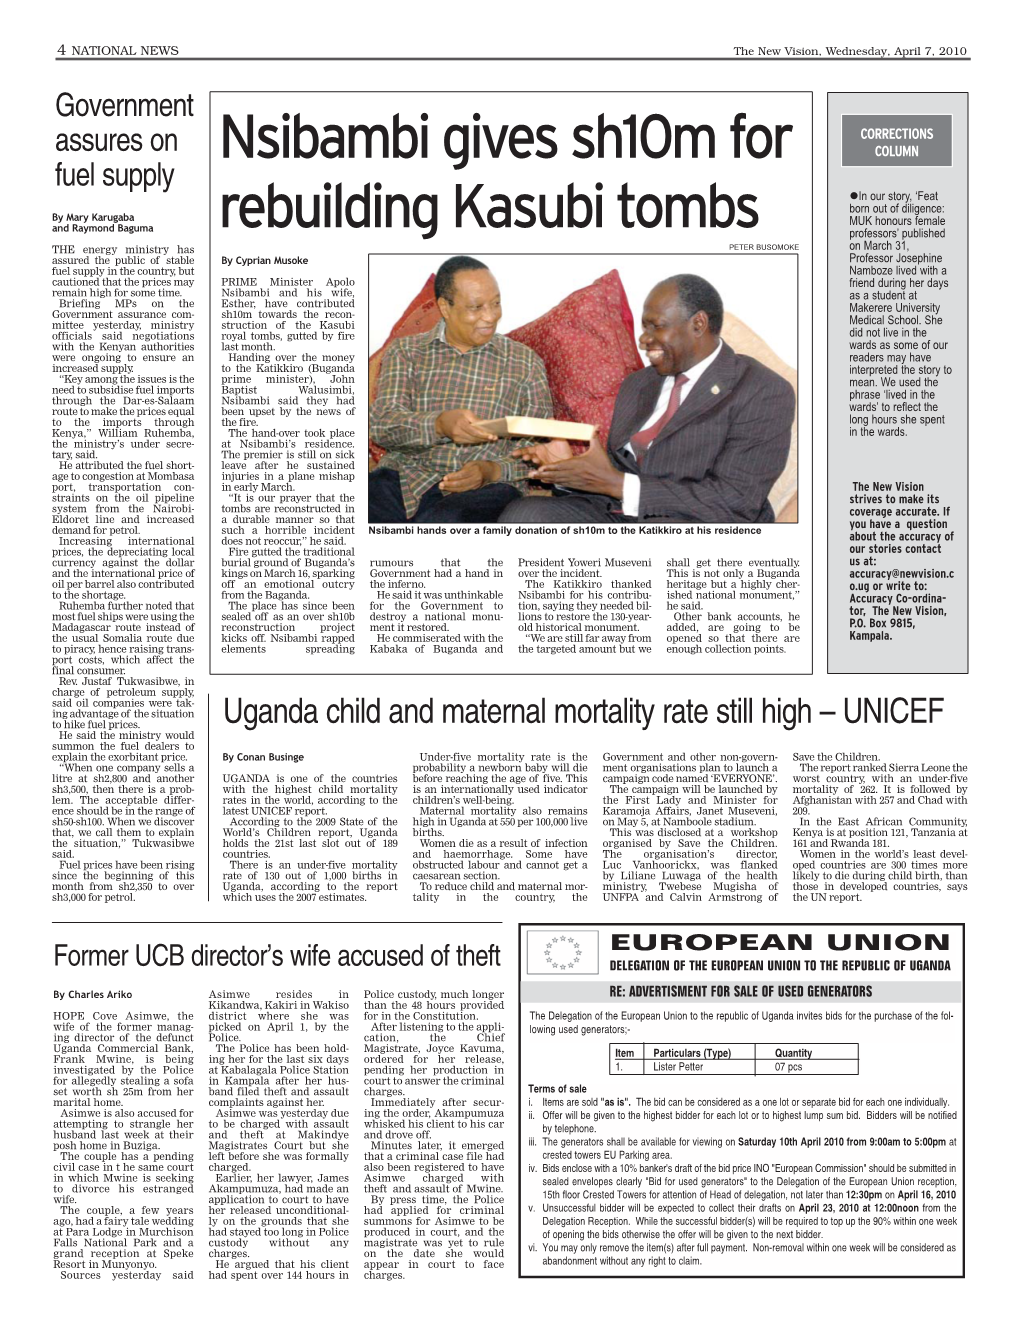 Nsibambi Gives Sh10m for Rebuilding Kasubi Tombs